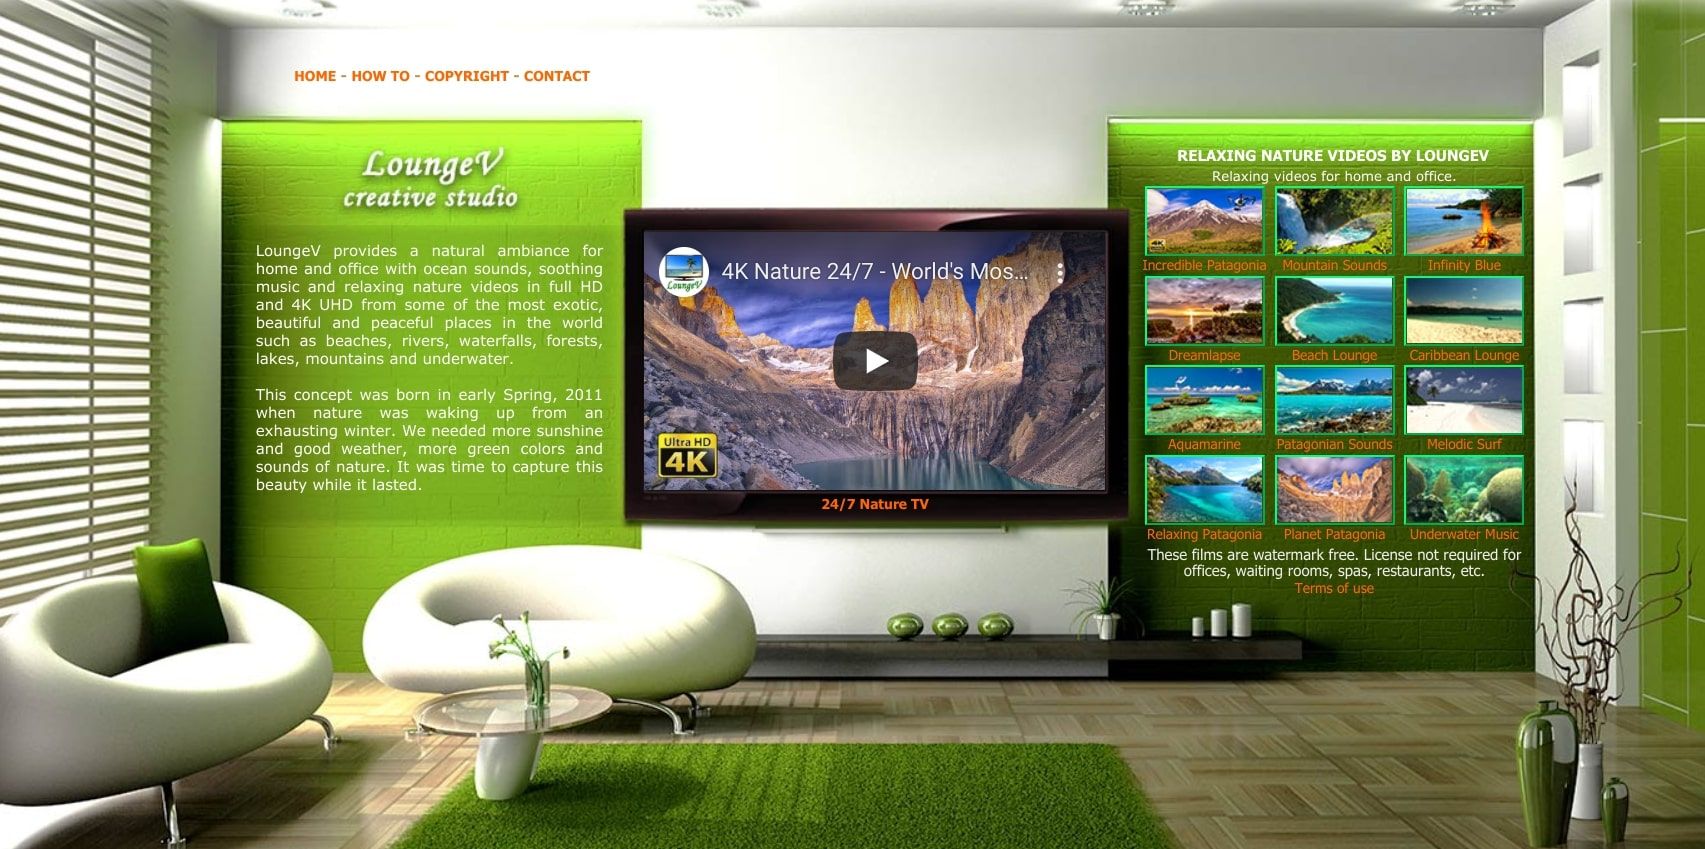 lounge v studio home page screenshot